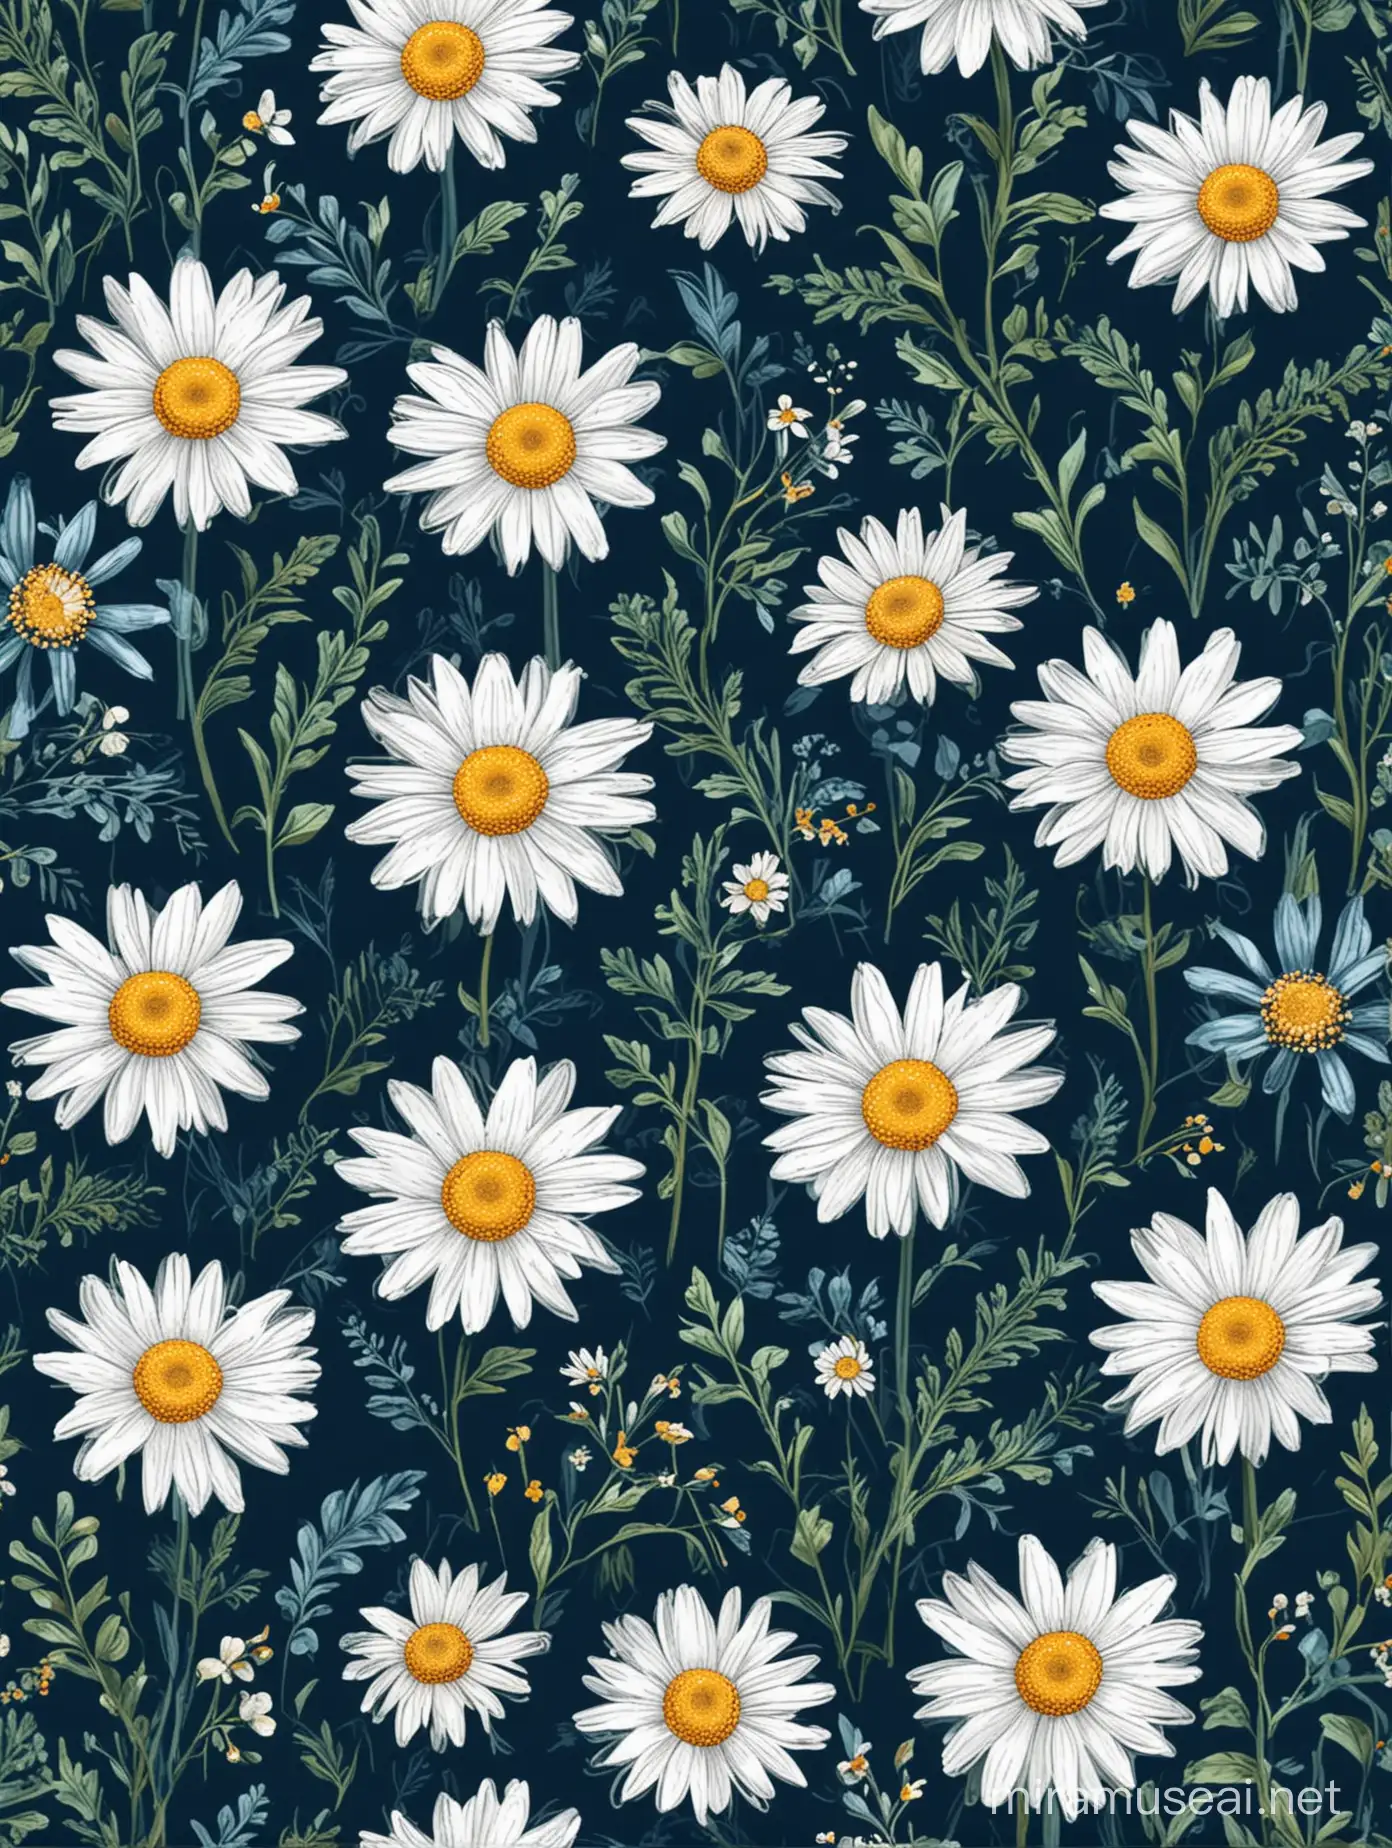 Botanical Seamless Pattern Natural Daisy Blue Wild Flower Illustration on Dark Blue Background